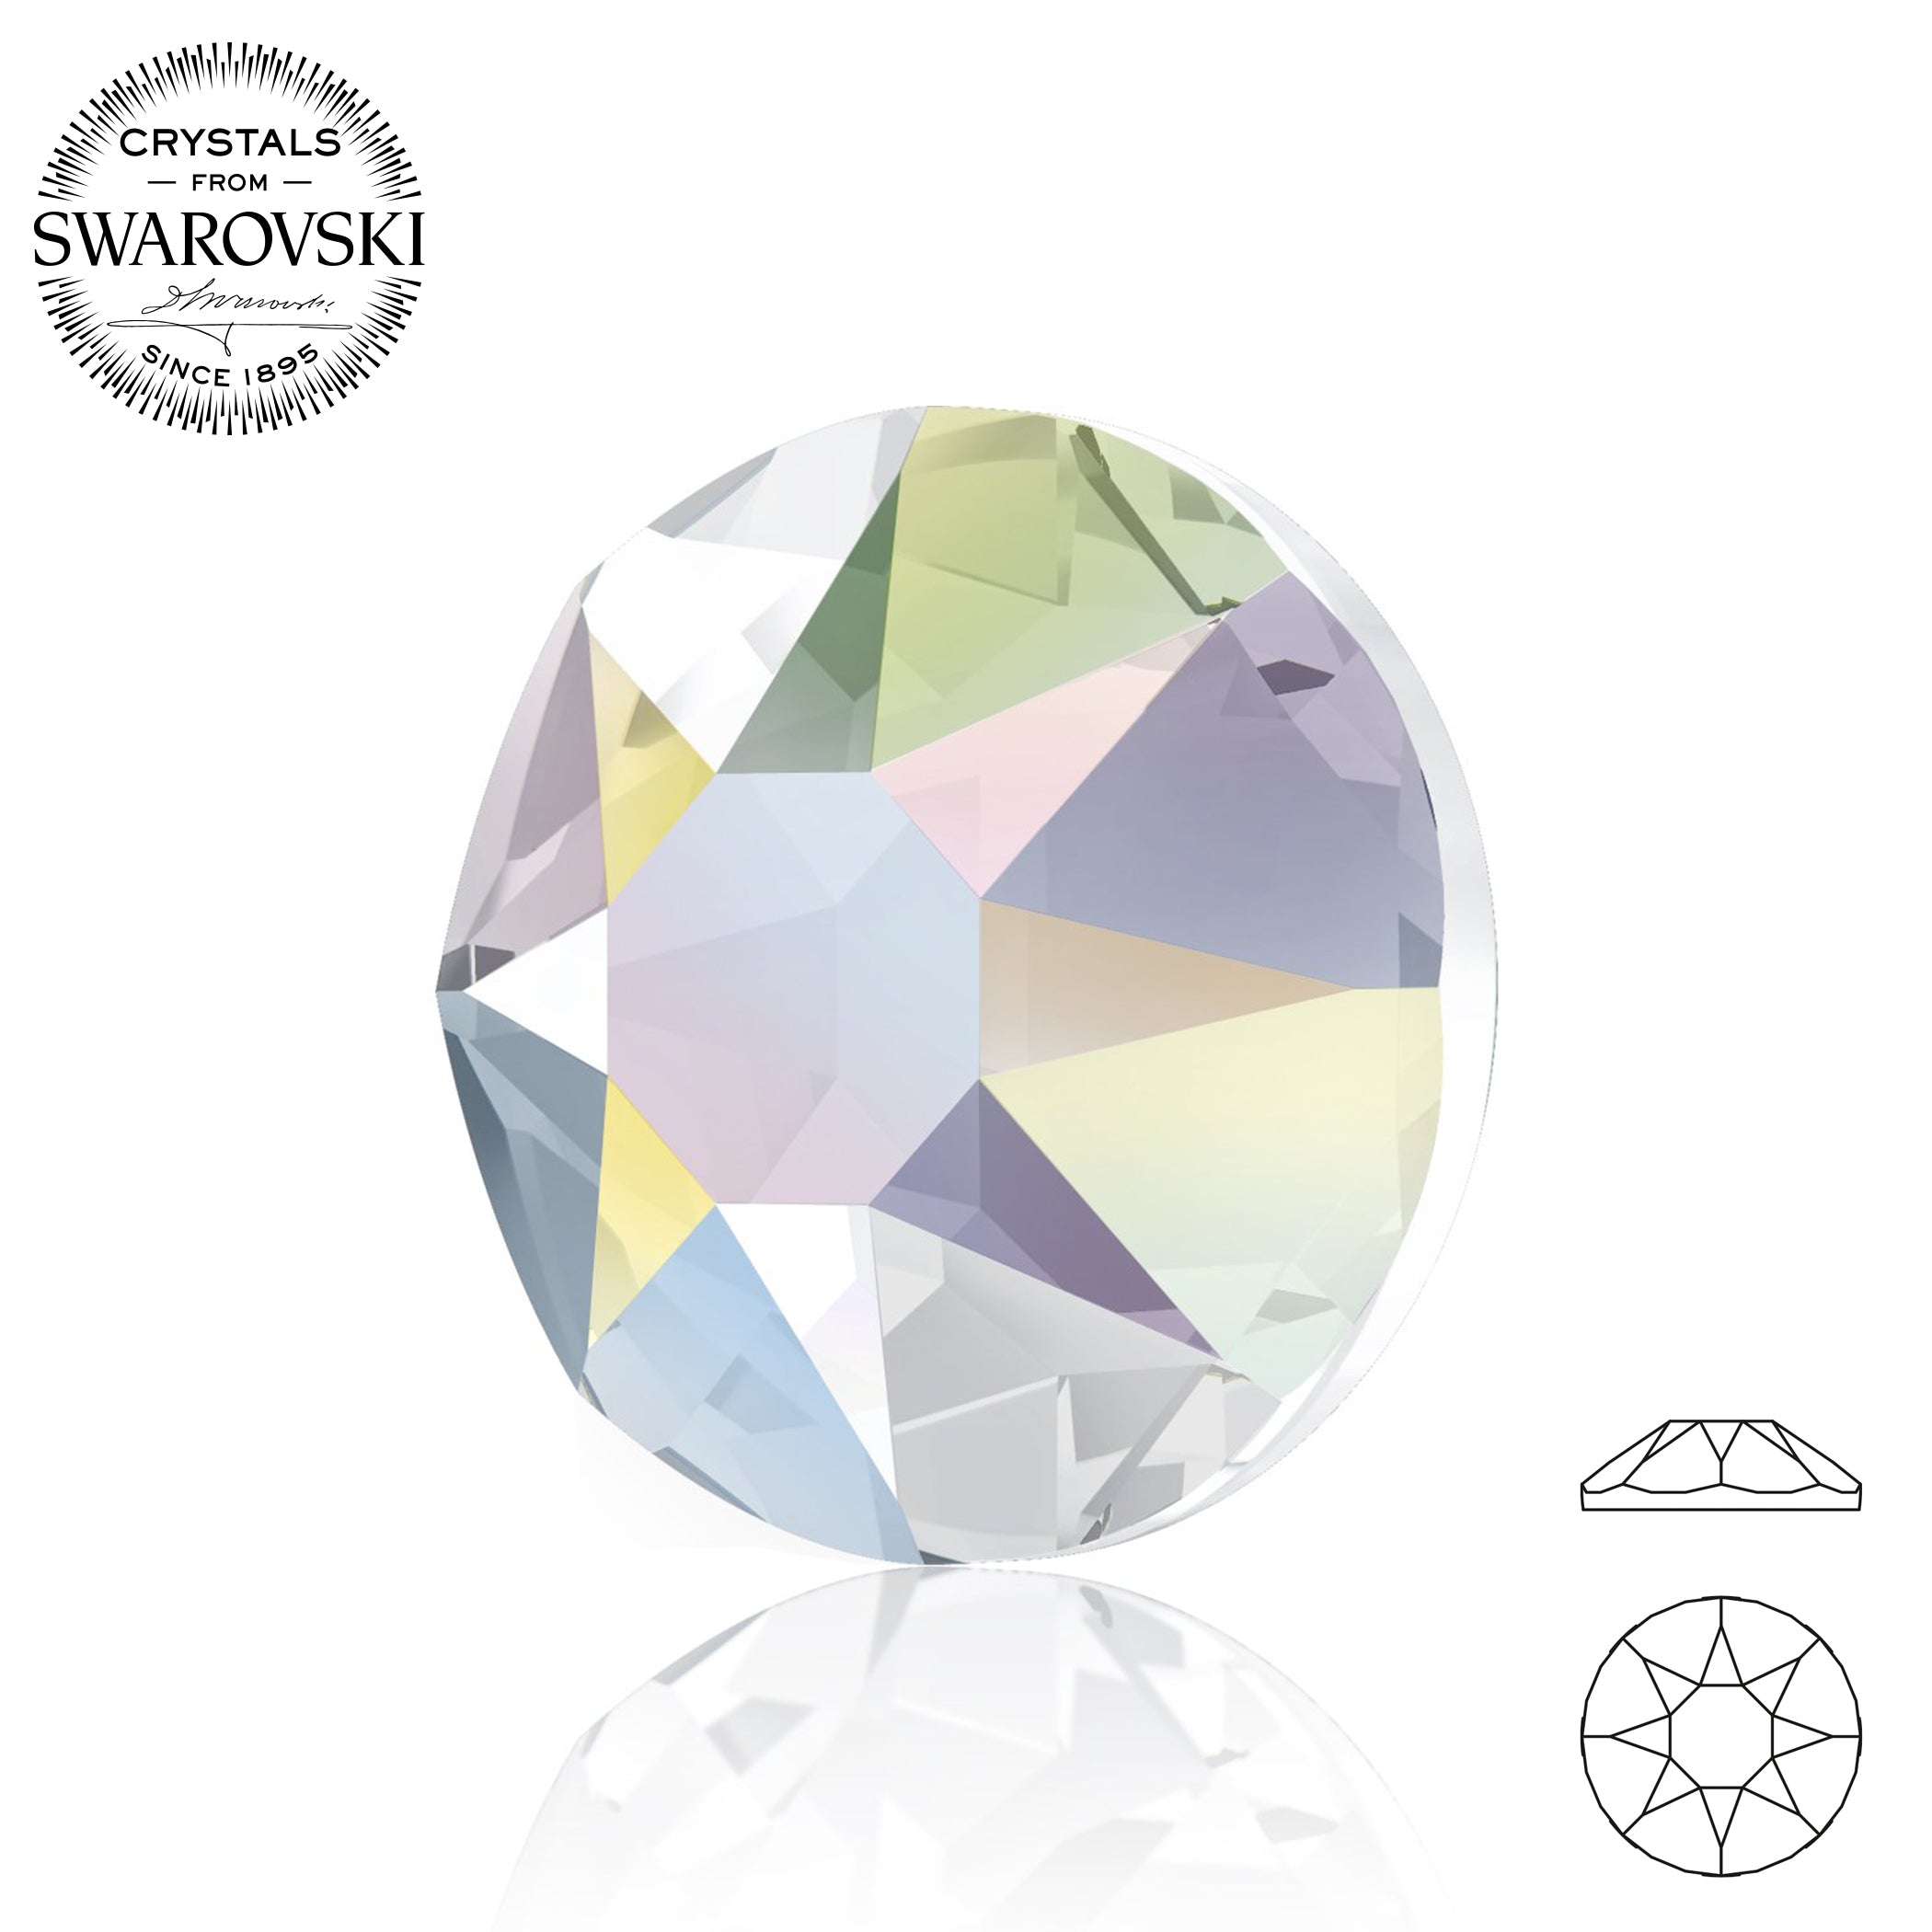 144 Swarovski 2028 / 2058 20ss crystal flatback rhinestones ss20 mix colors  by Crystal-Wholesale : : Home